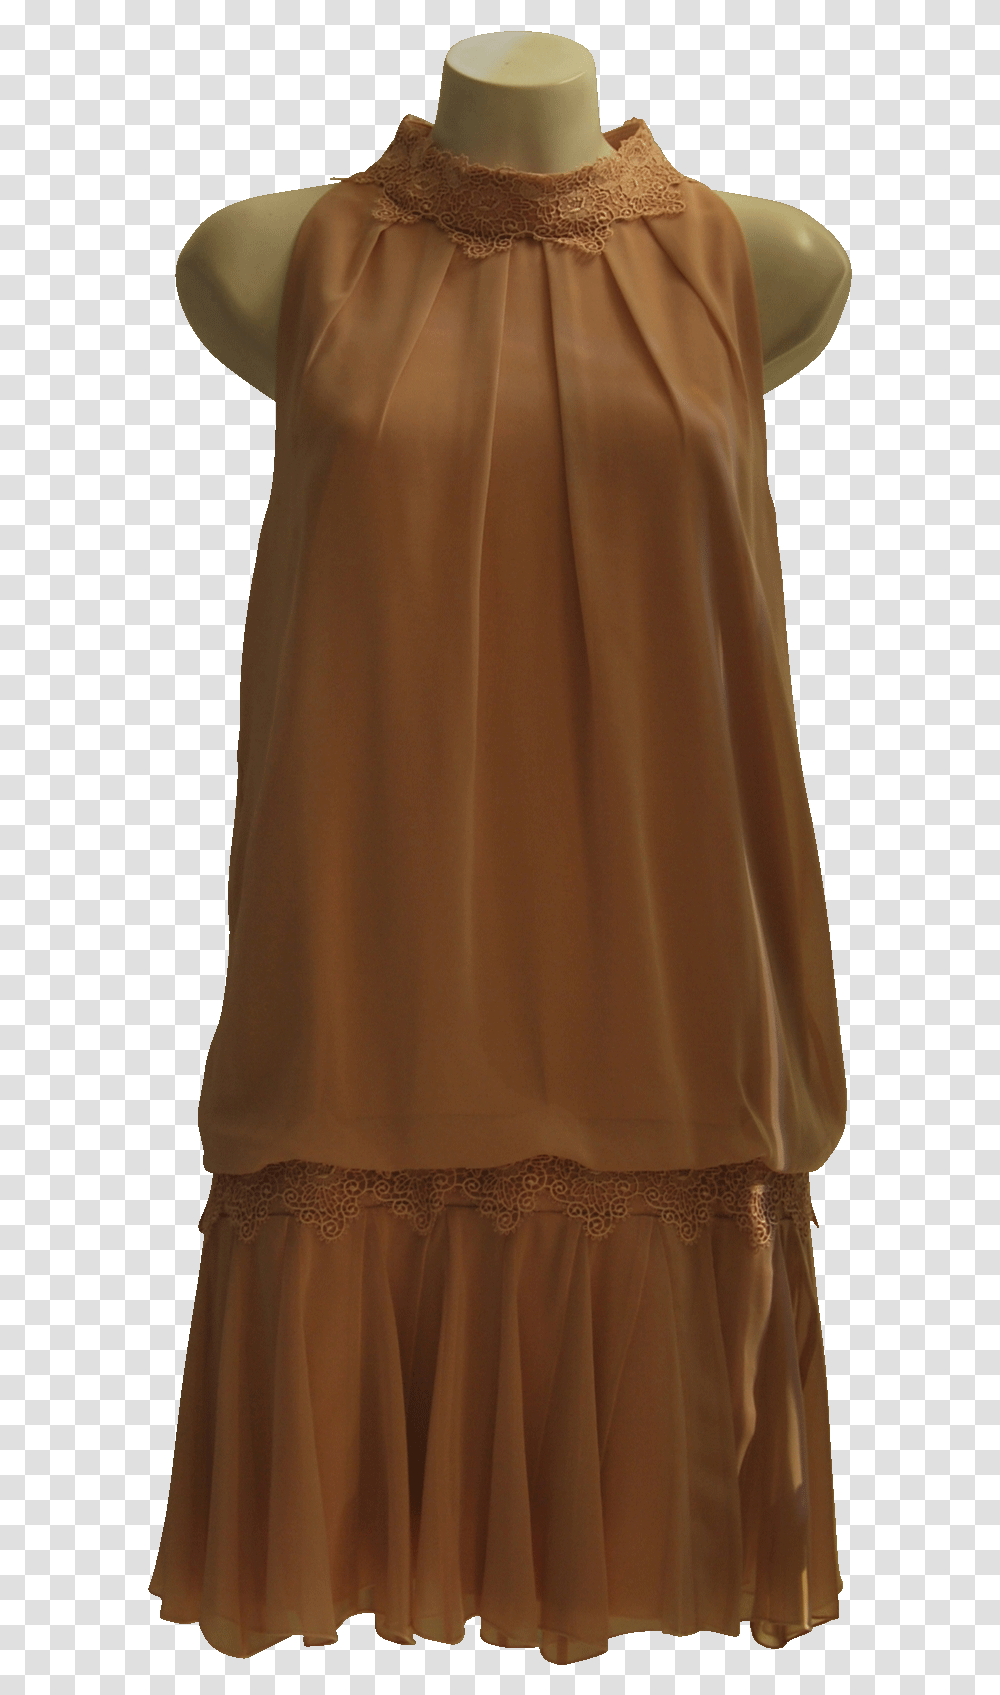 Duende Vestidos De Fiesta Granada Download Day Dress, Apparel, Skirt, Cloak Transparent Png